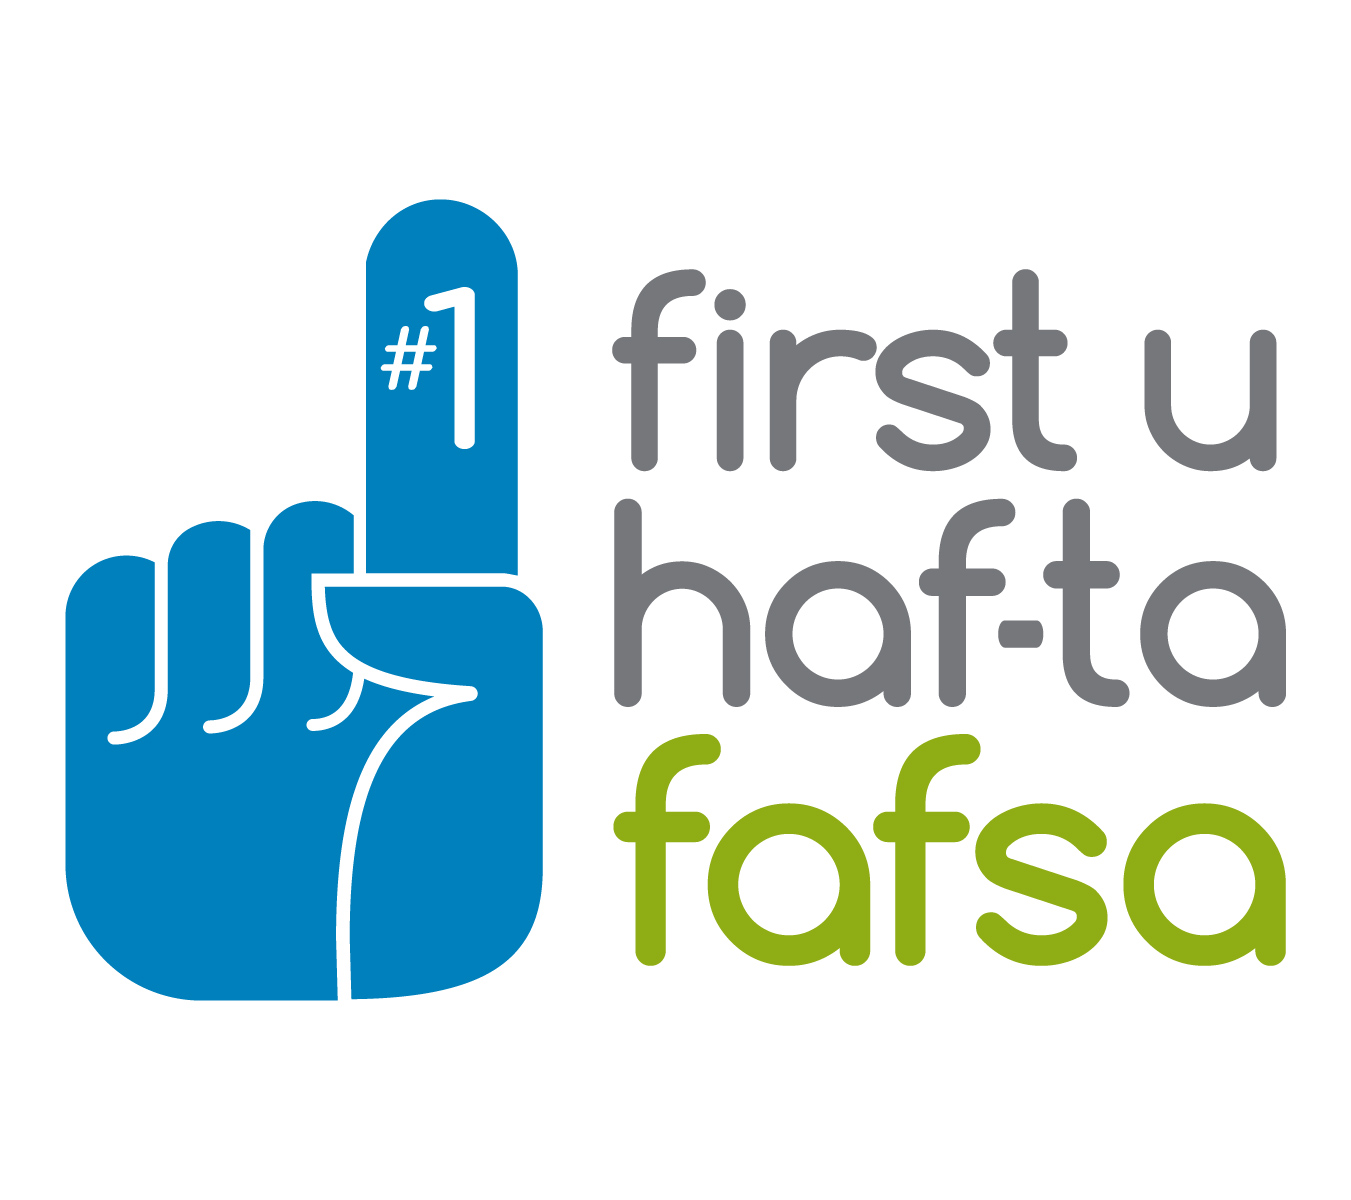 First U Haf-ta FASFA logo